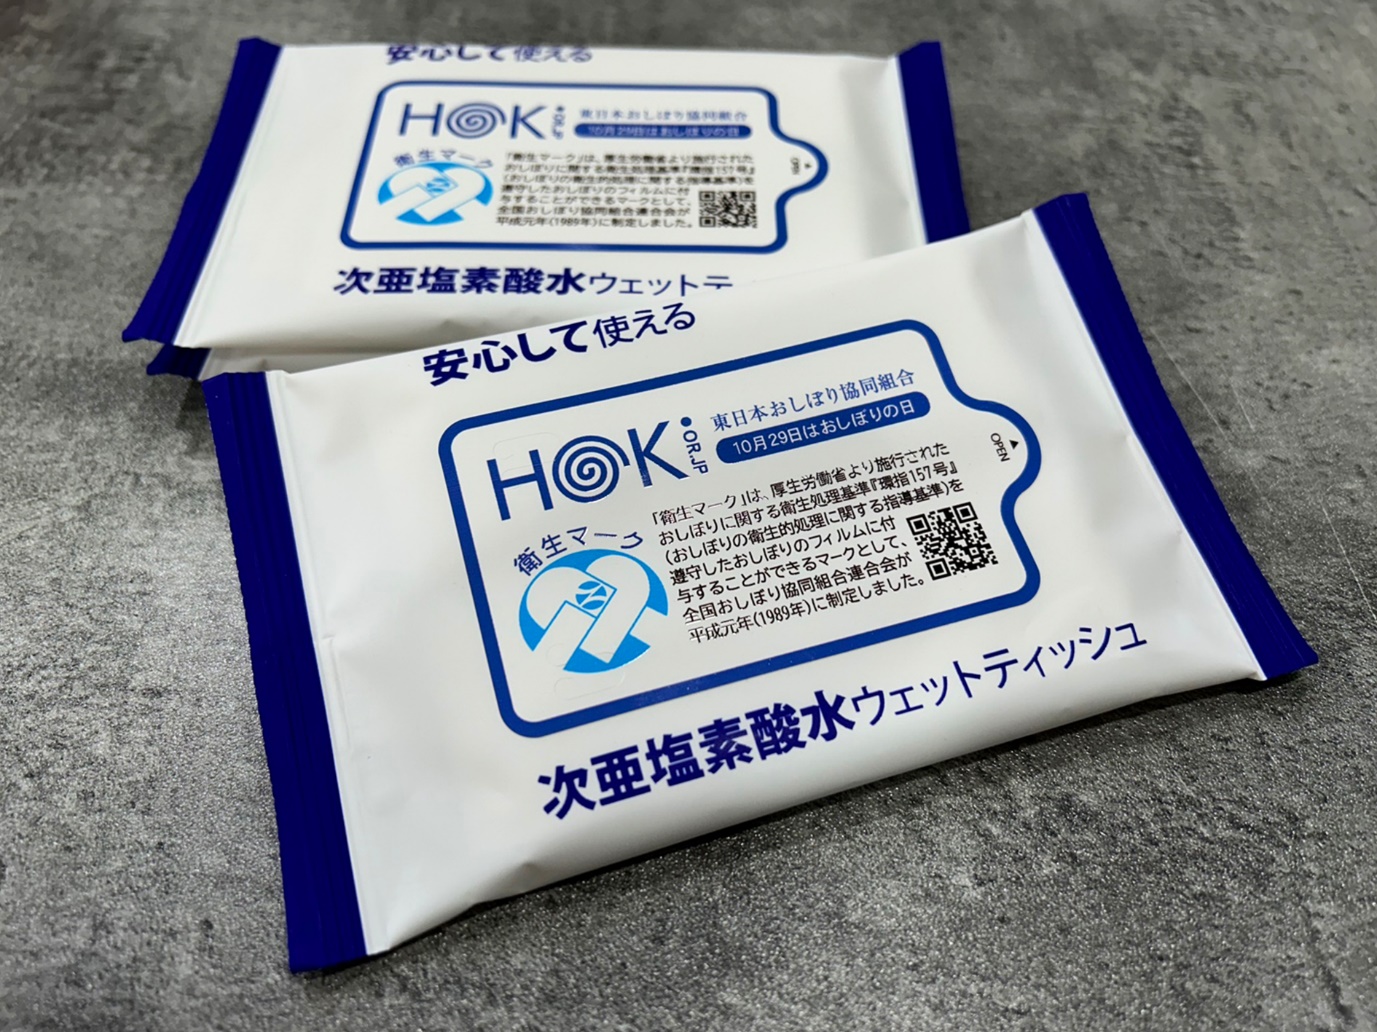 HOK, 東日本おしぼり共同組合, おしぼりの日, 衛生マークの販促用ウェットティッシュ